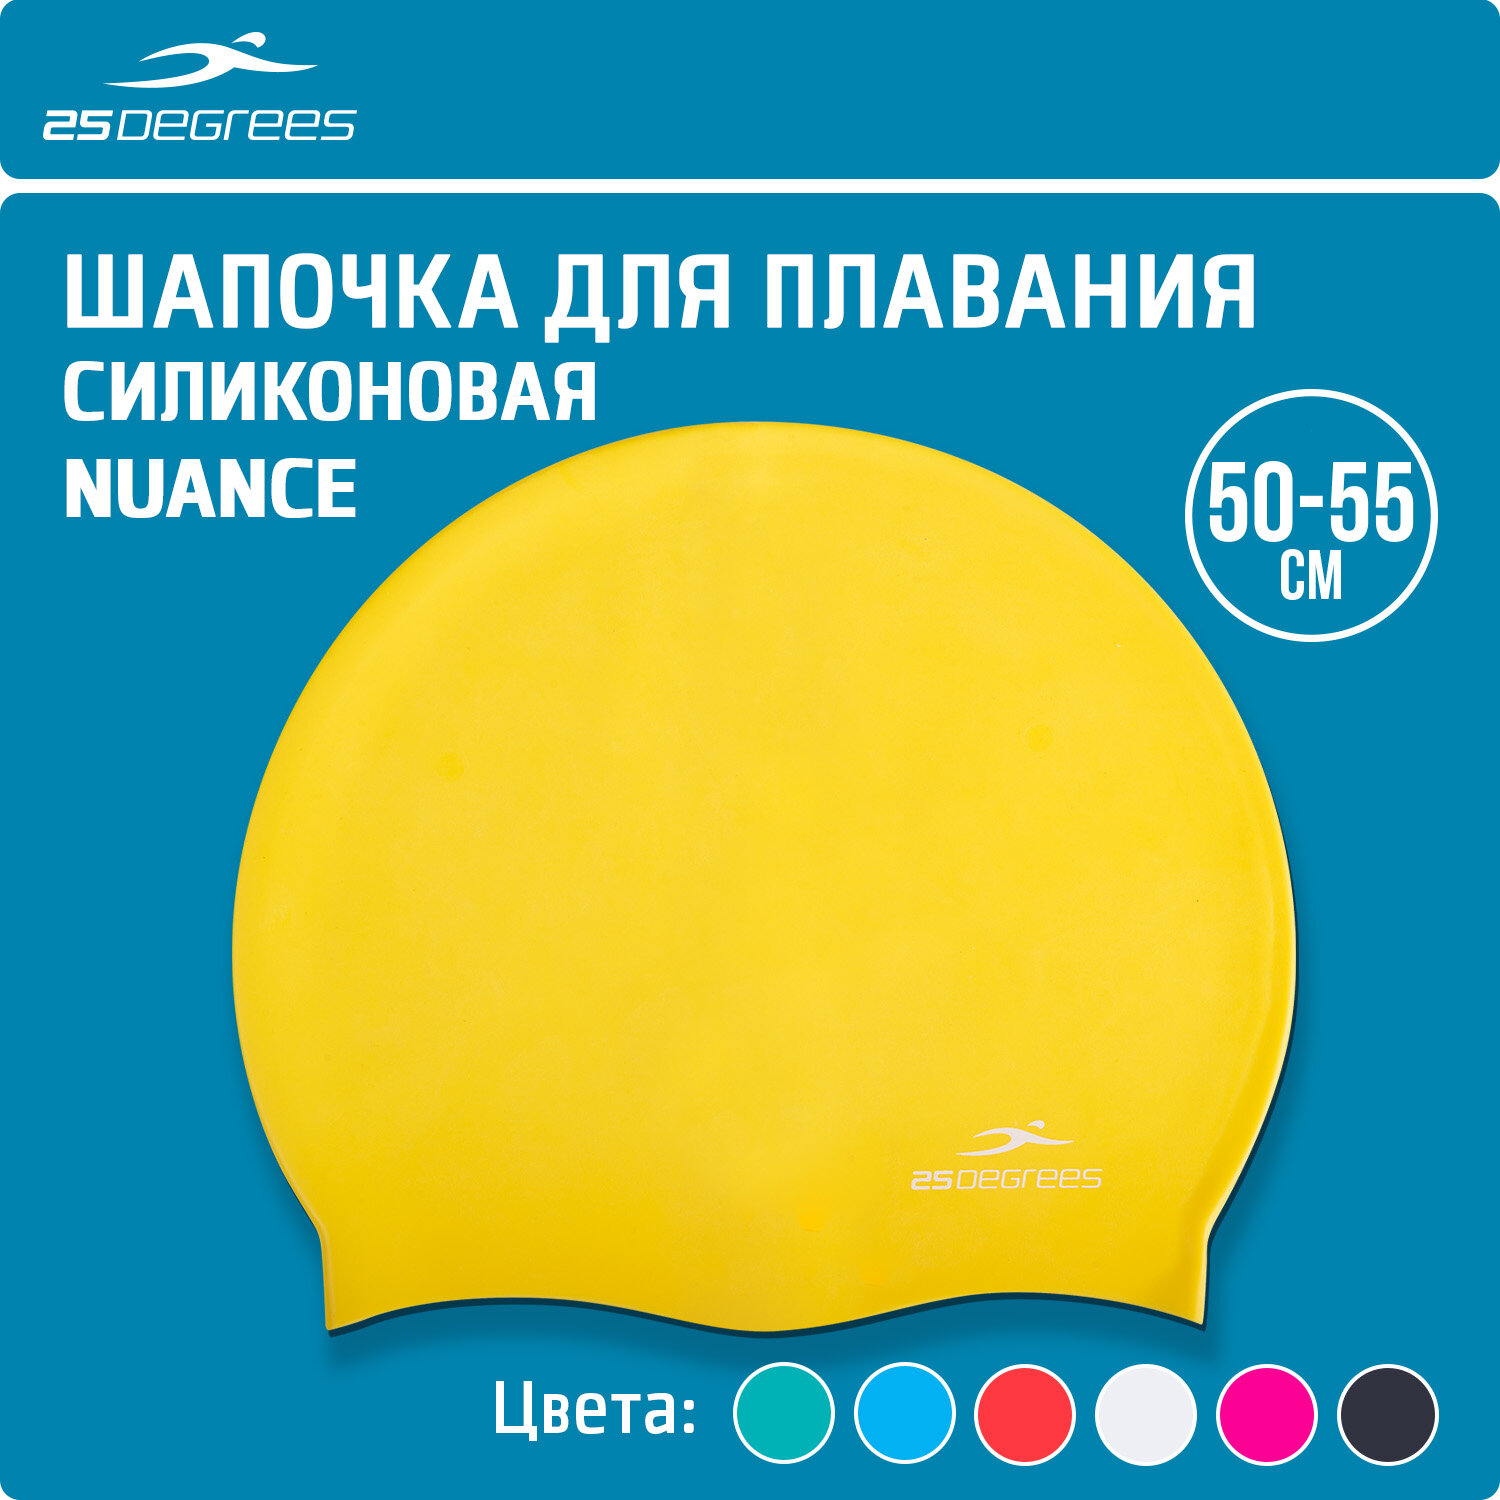 Шапочка для плавания 25DEGREES Nuance Yellow 25D21004J, силикон, подростковый